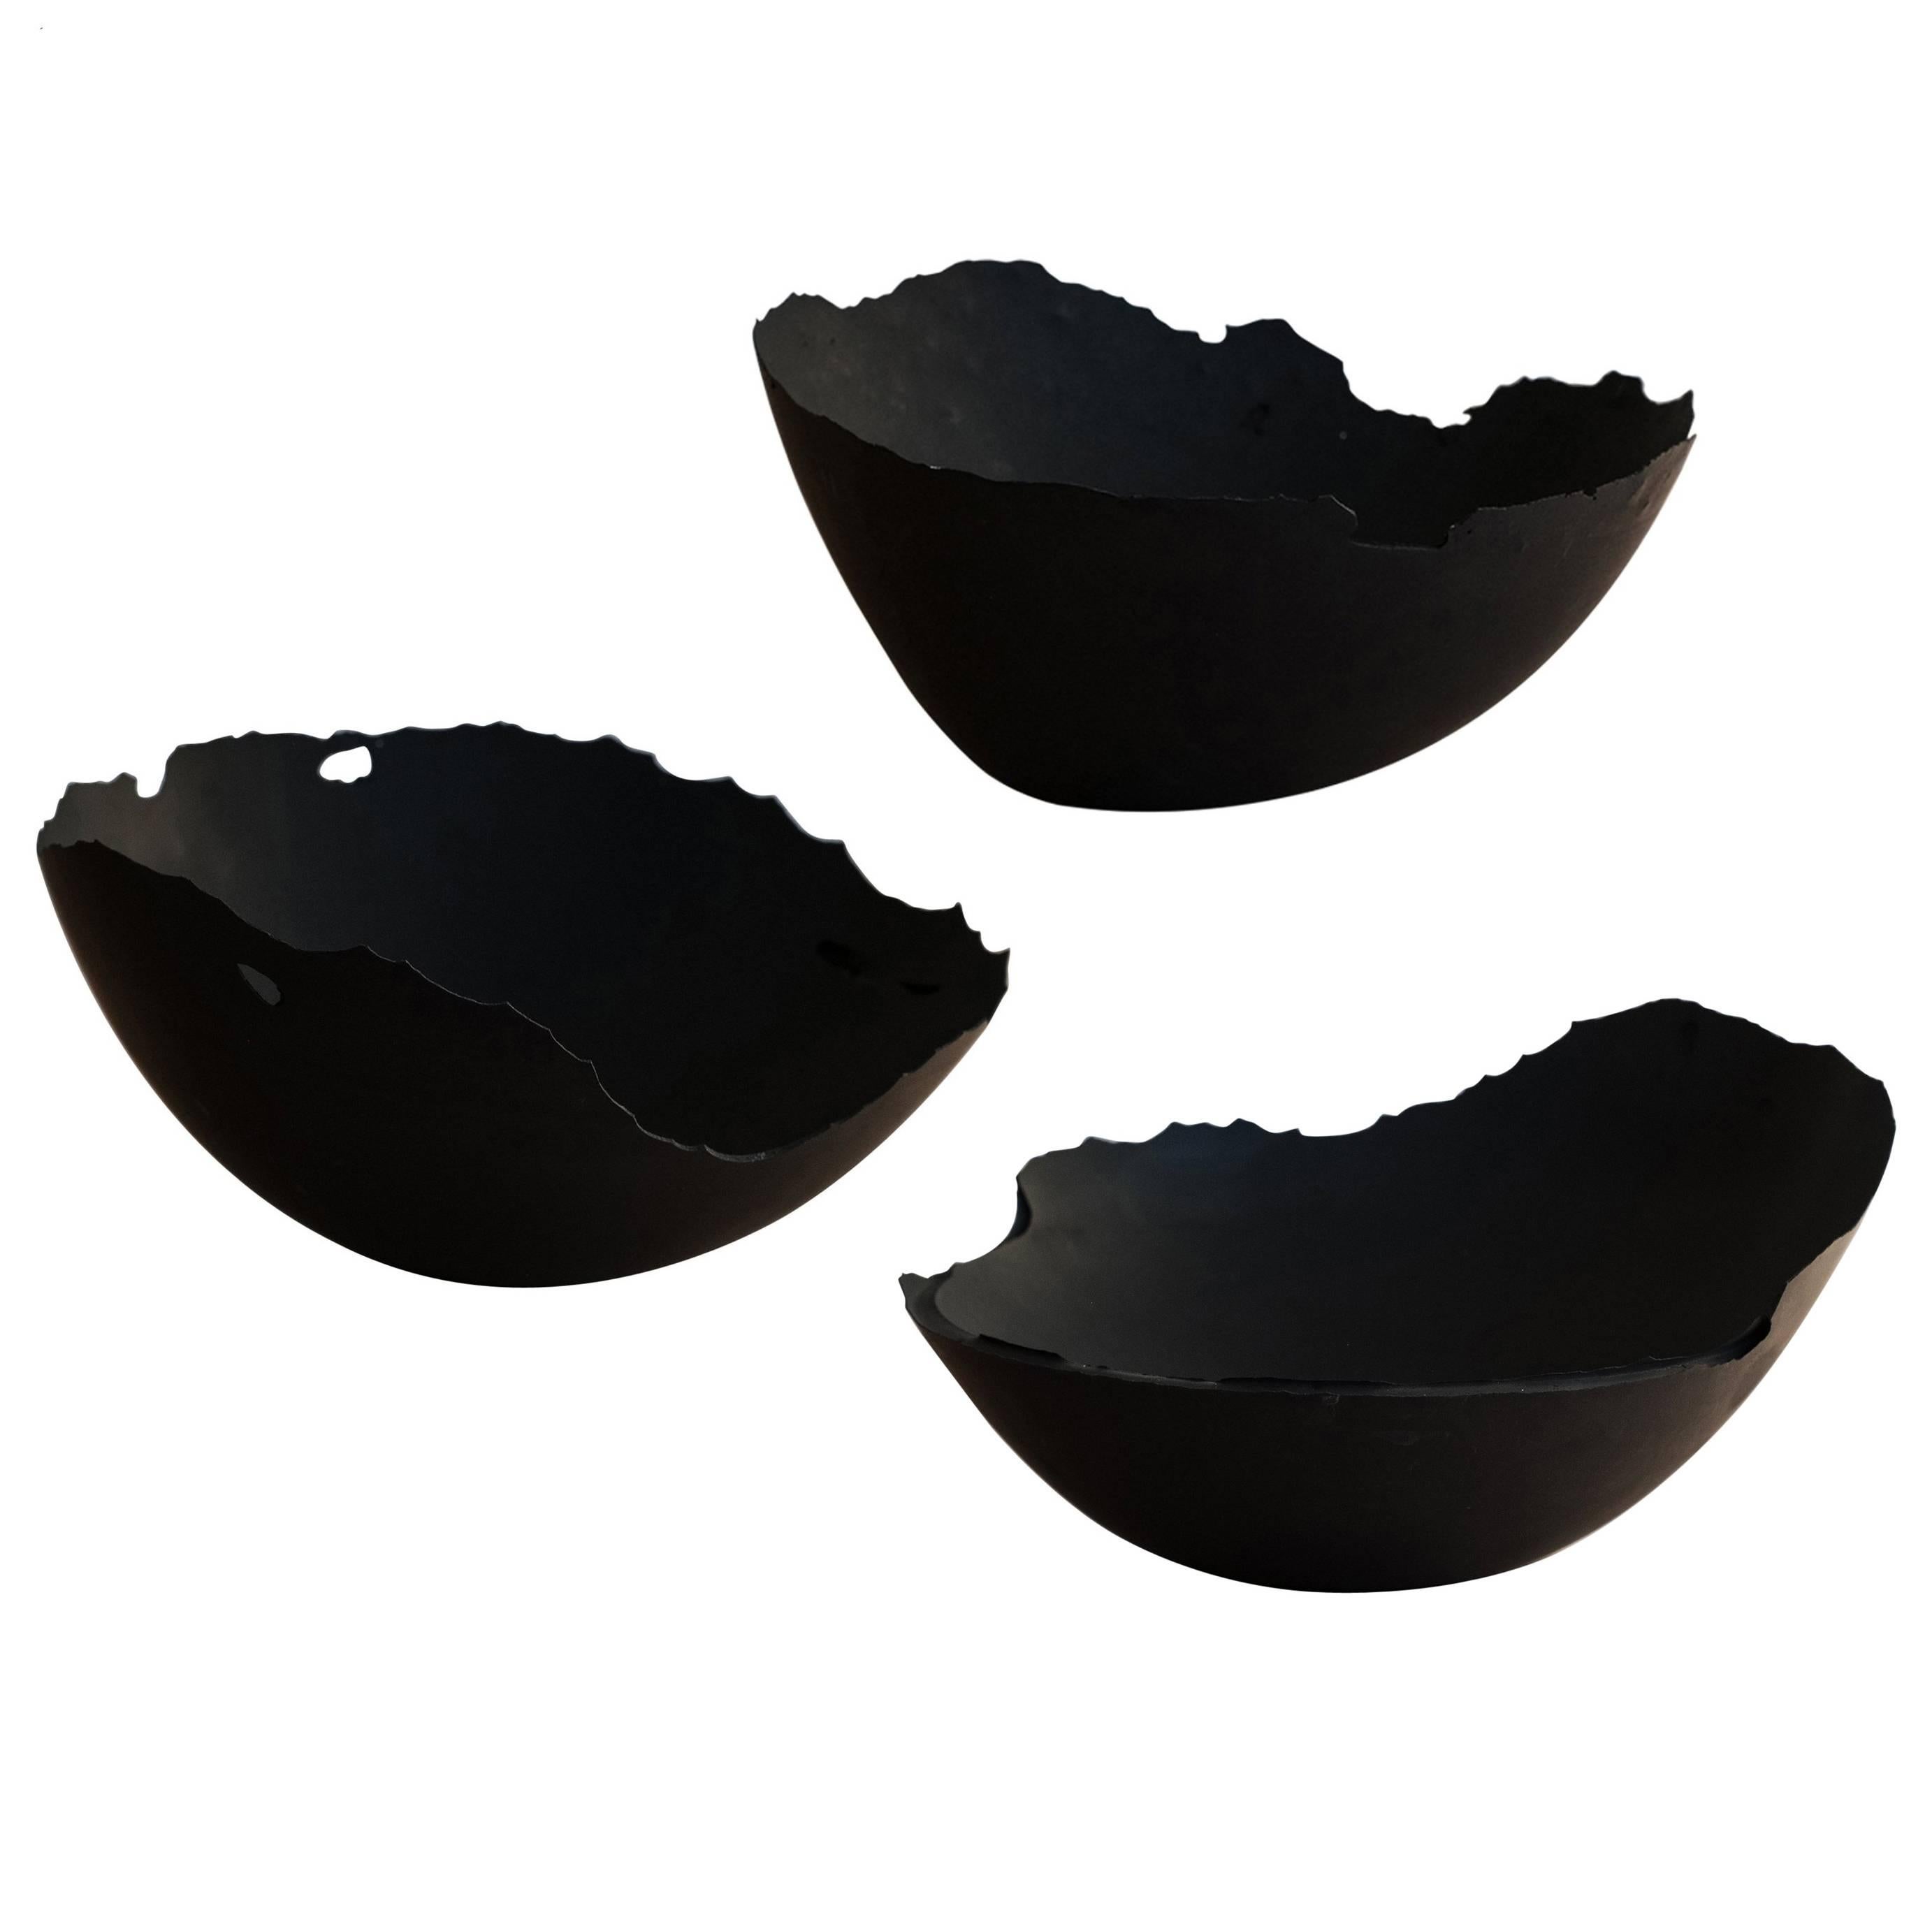 Handmade Cast Concrete Bowl in Black by UMÉ Studio, Set of Three